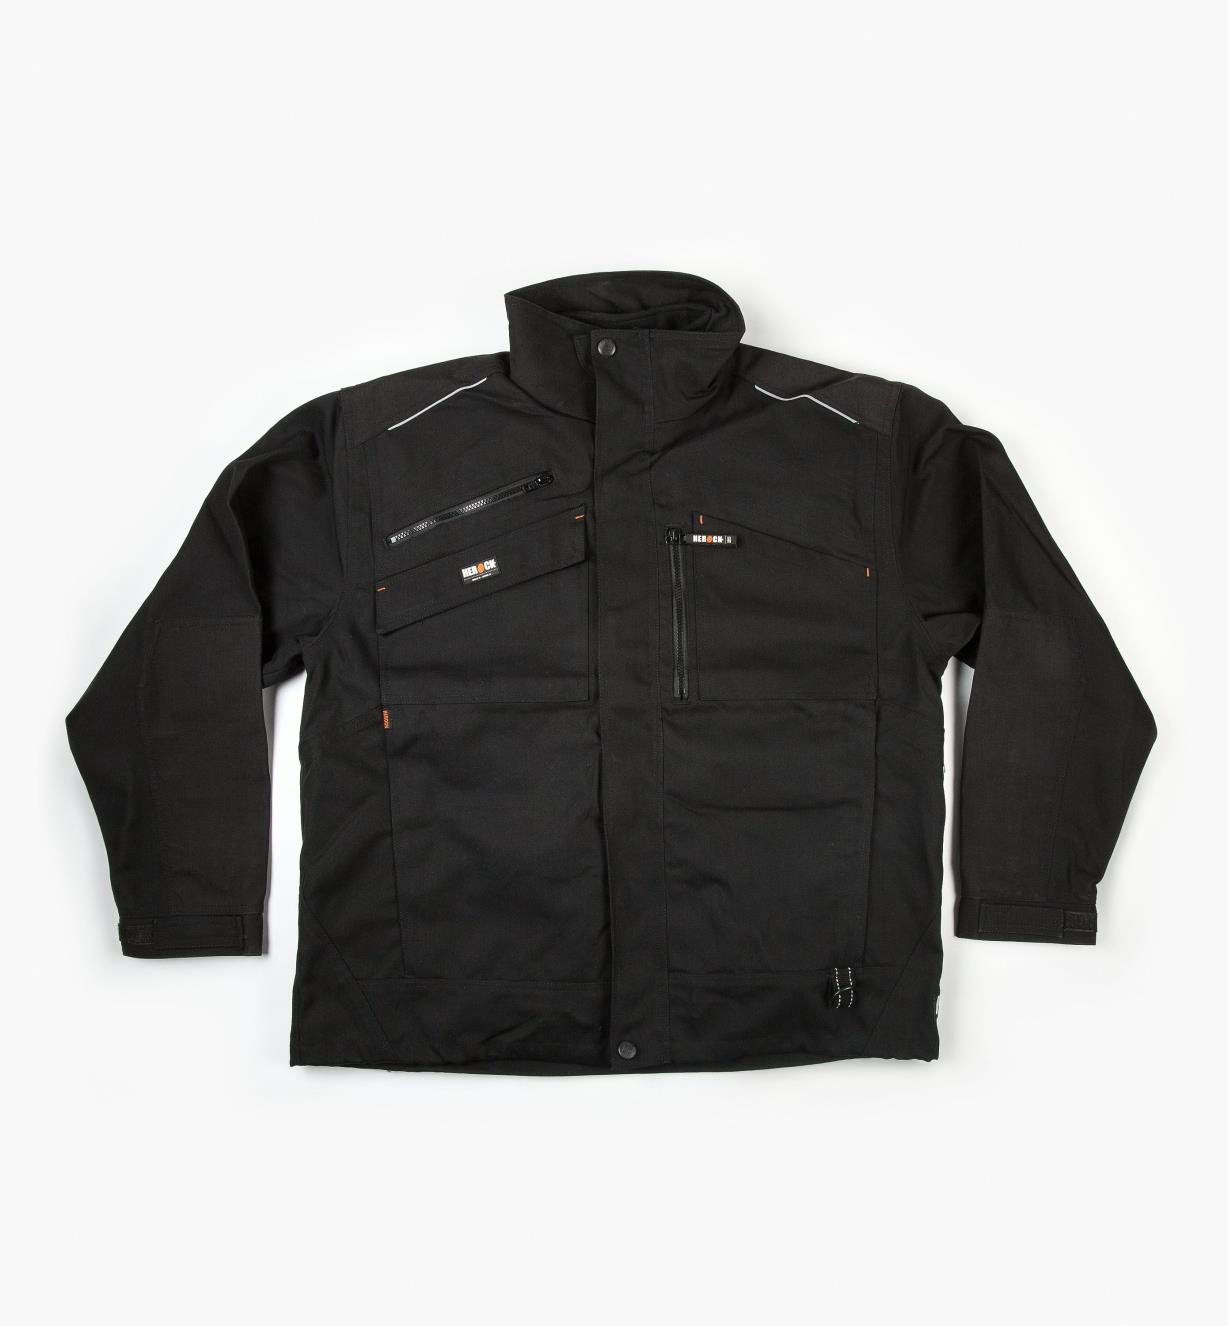 Herock Convertible Work Jacket, Black